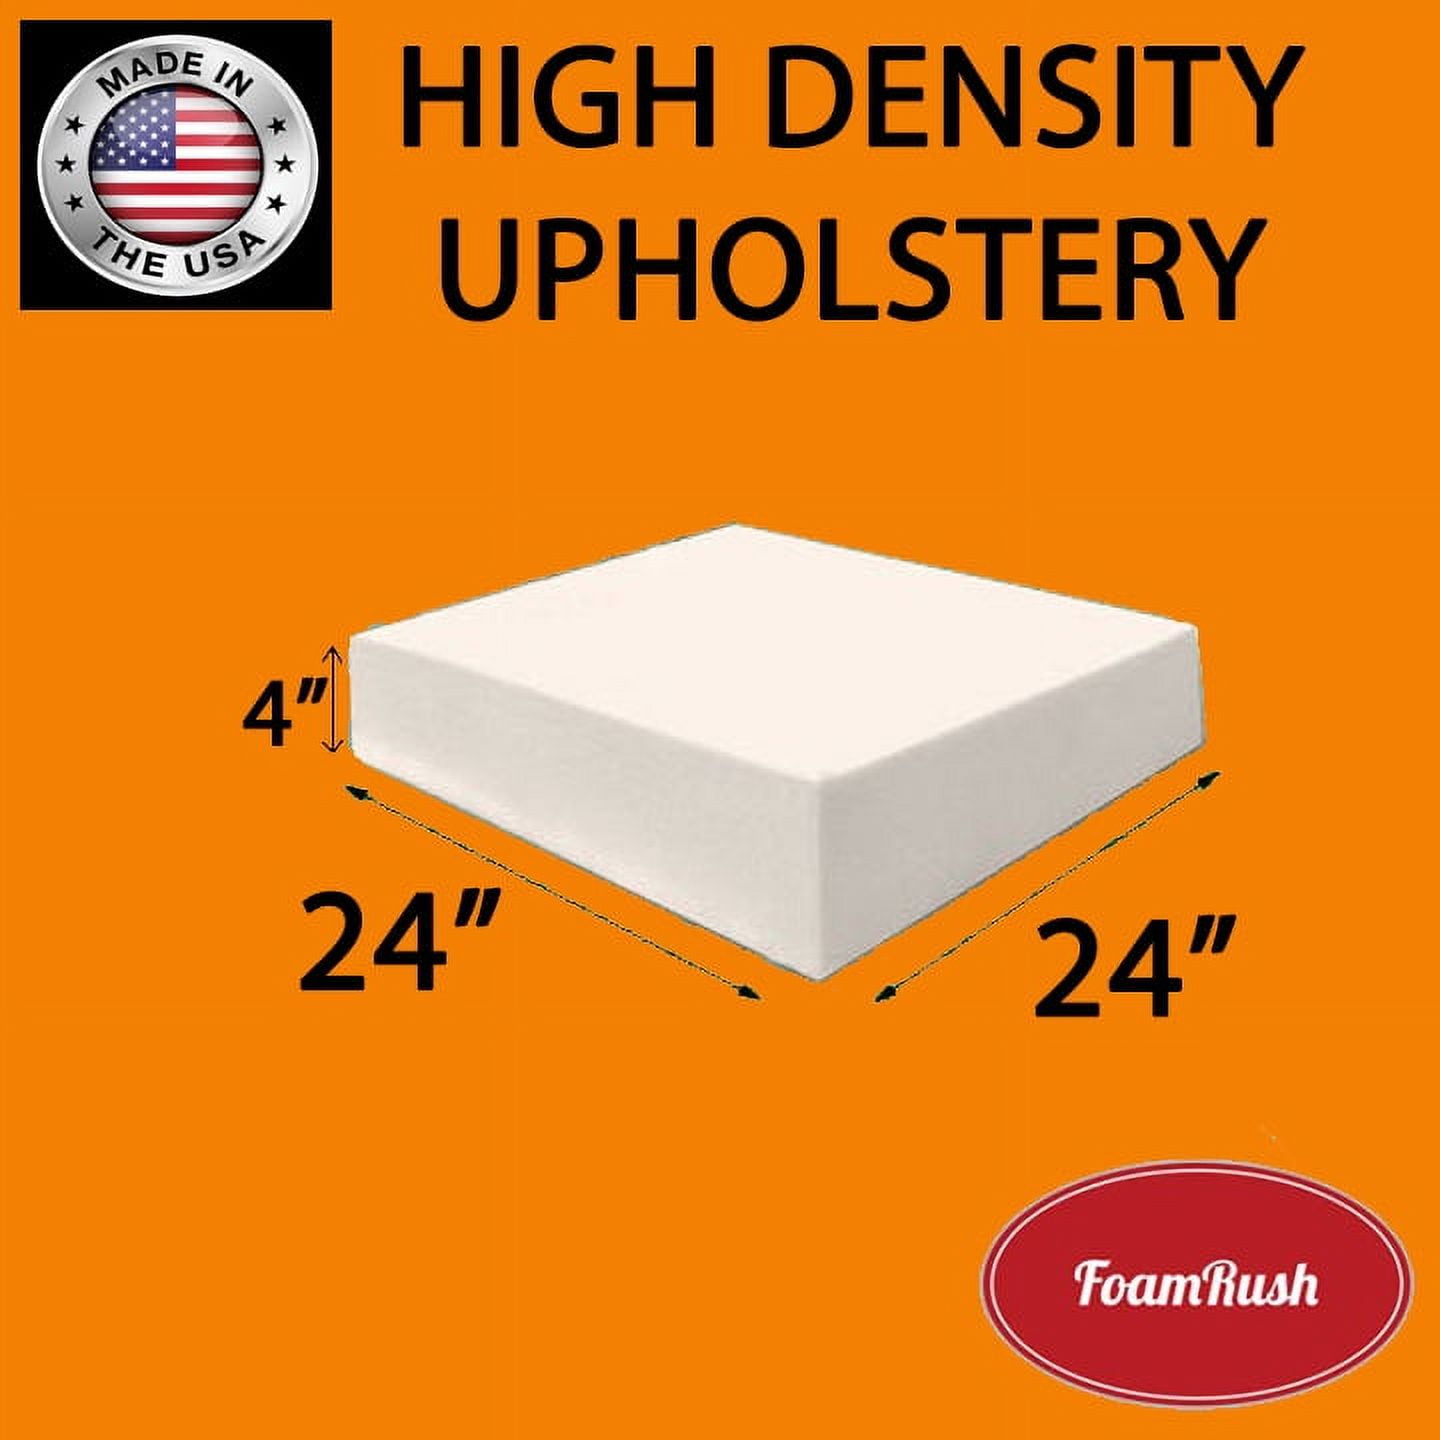  FoamRush 2 x 20 x 20 Charcoal High Density Upholstery Foam  Cushion (Upholstery Sheet, Foam Padding, Seat Replacement, Chair Cushion  Replacement, Square Foam, Wheelchair Seat Cushion) Made in USA : Arts